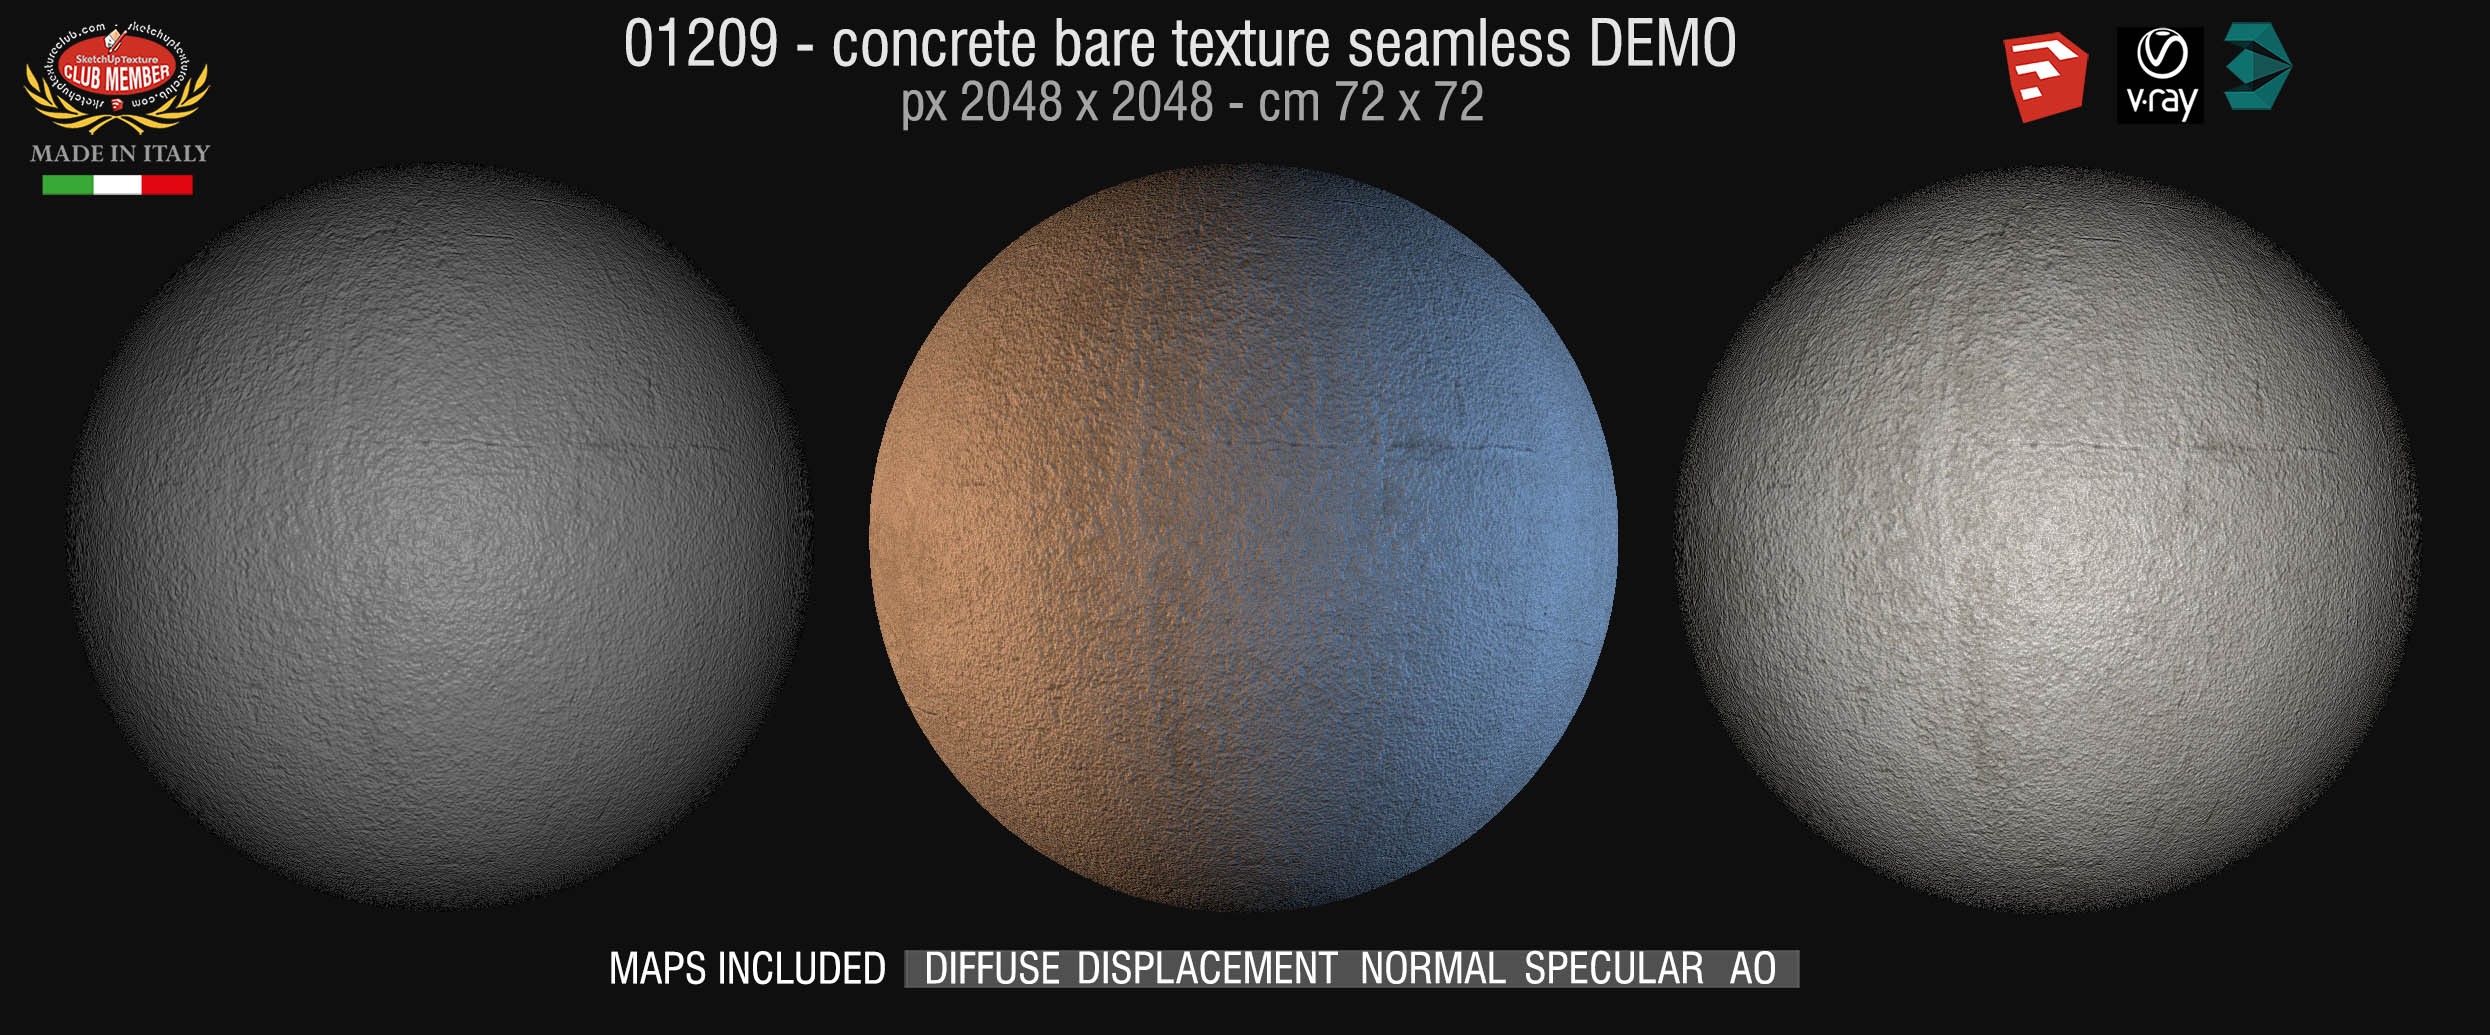 01209 HR Concrete bare clean texture seamless + maps DEMO